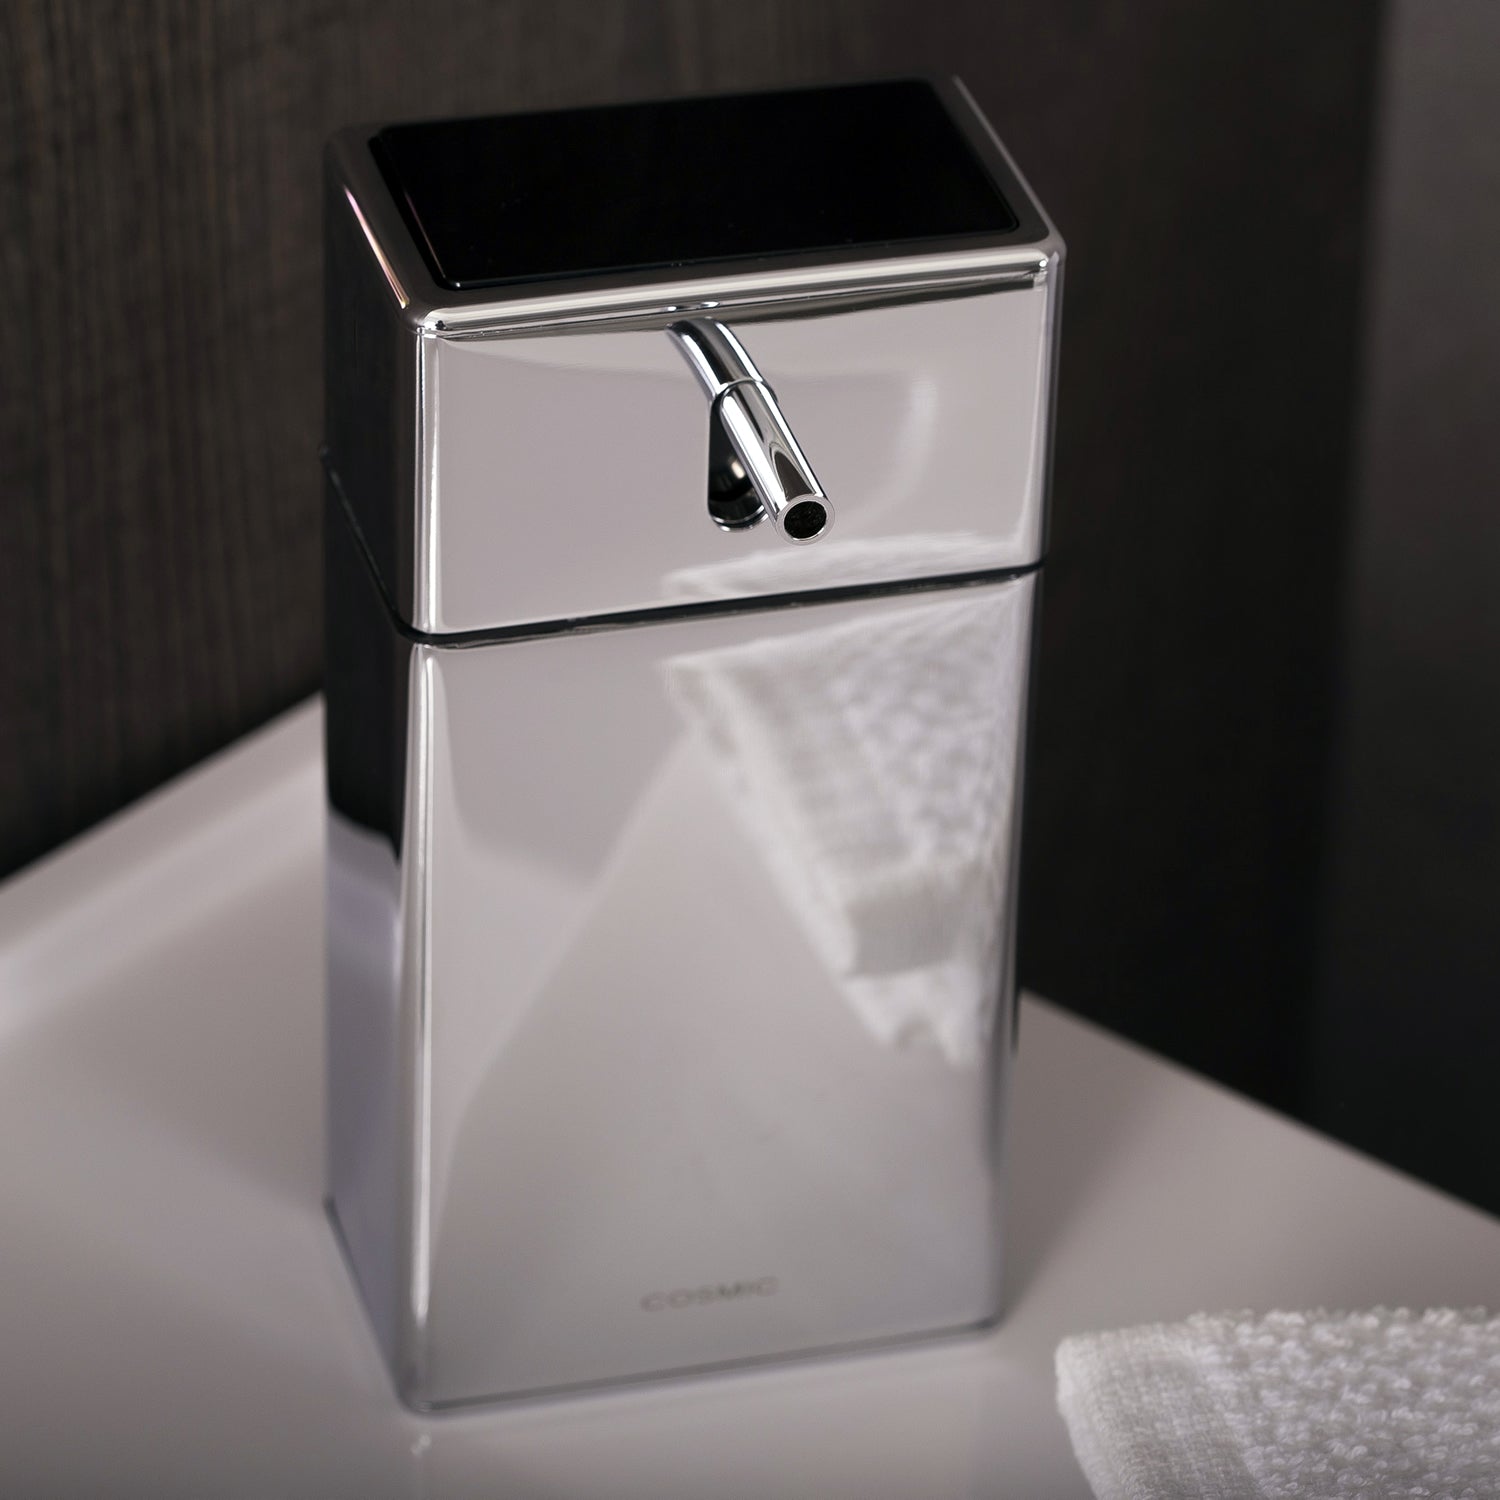 COSMIC Extreme Soap Dispenser, Wall Mount, Plastic, Chrome - Black Finish, 3-1/8 x 6-5/16 x 3-3/8 Inches (2530105)